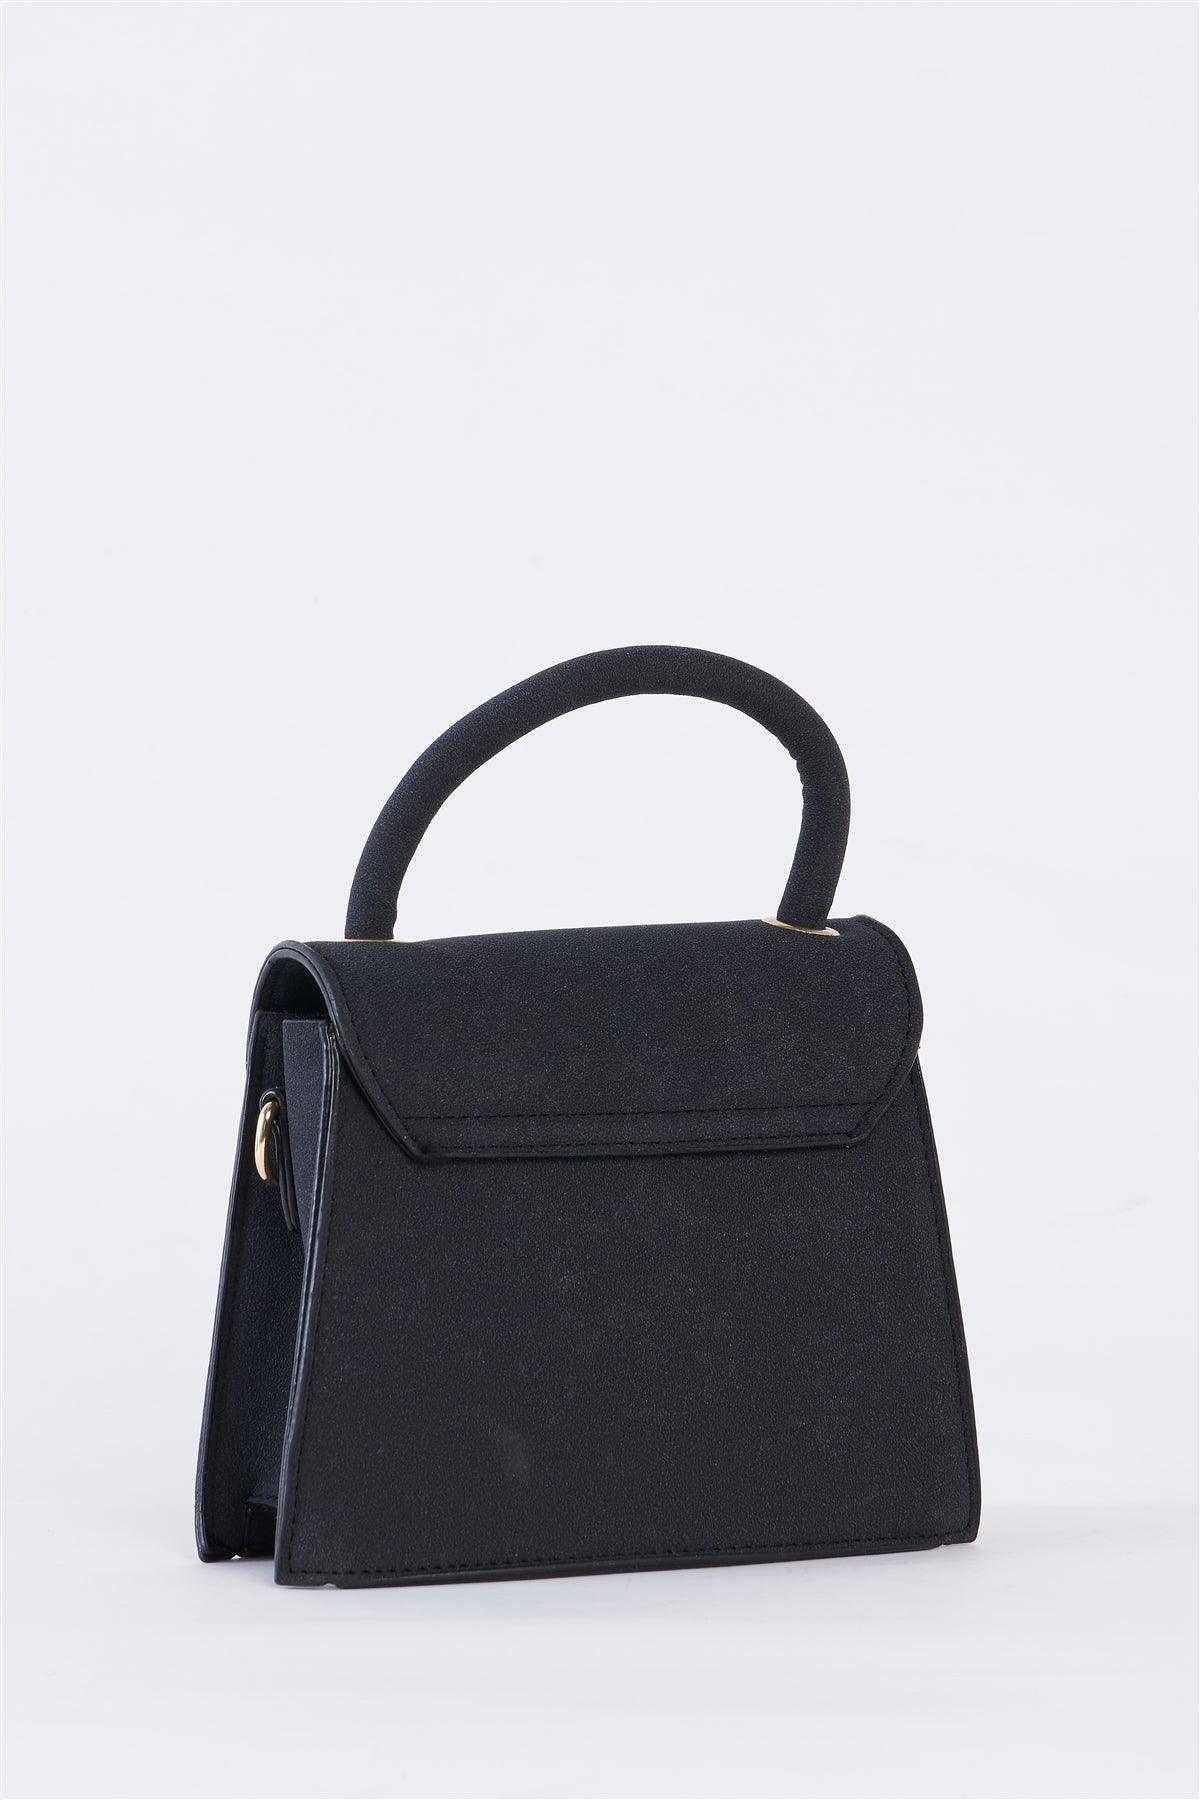 Black Vintage Inspired Purse With Gem Closure Detail /3 Bags